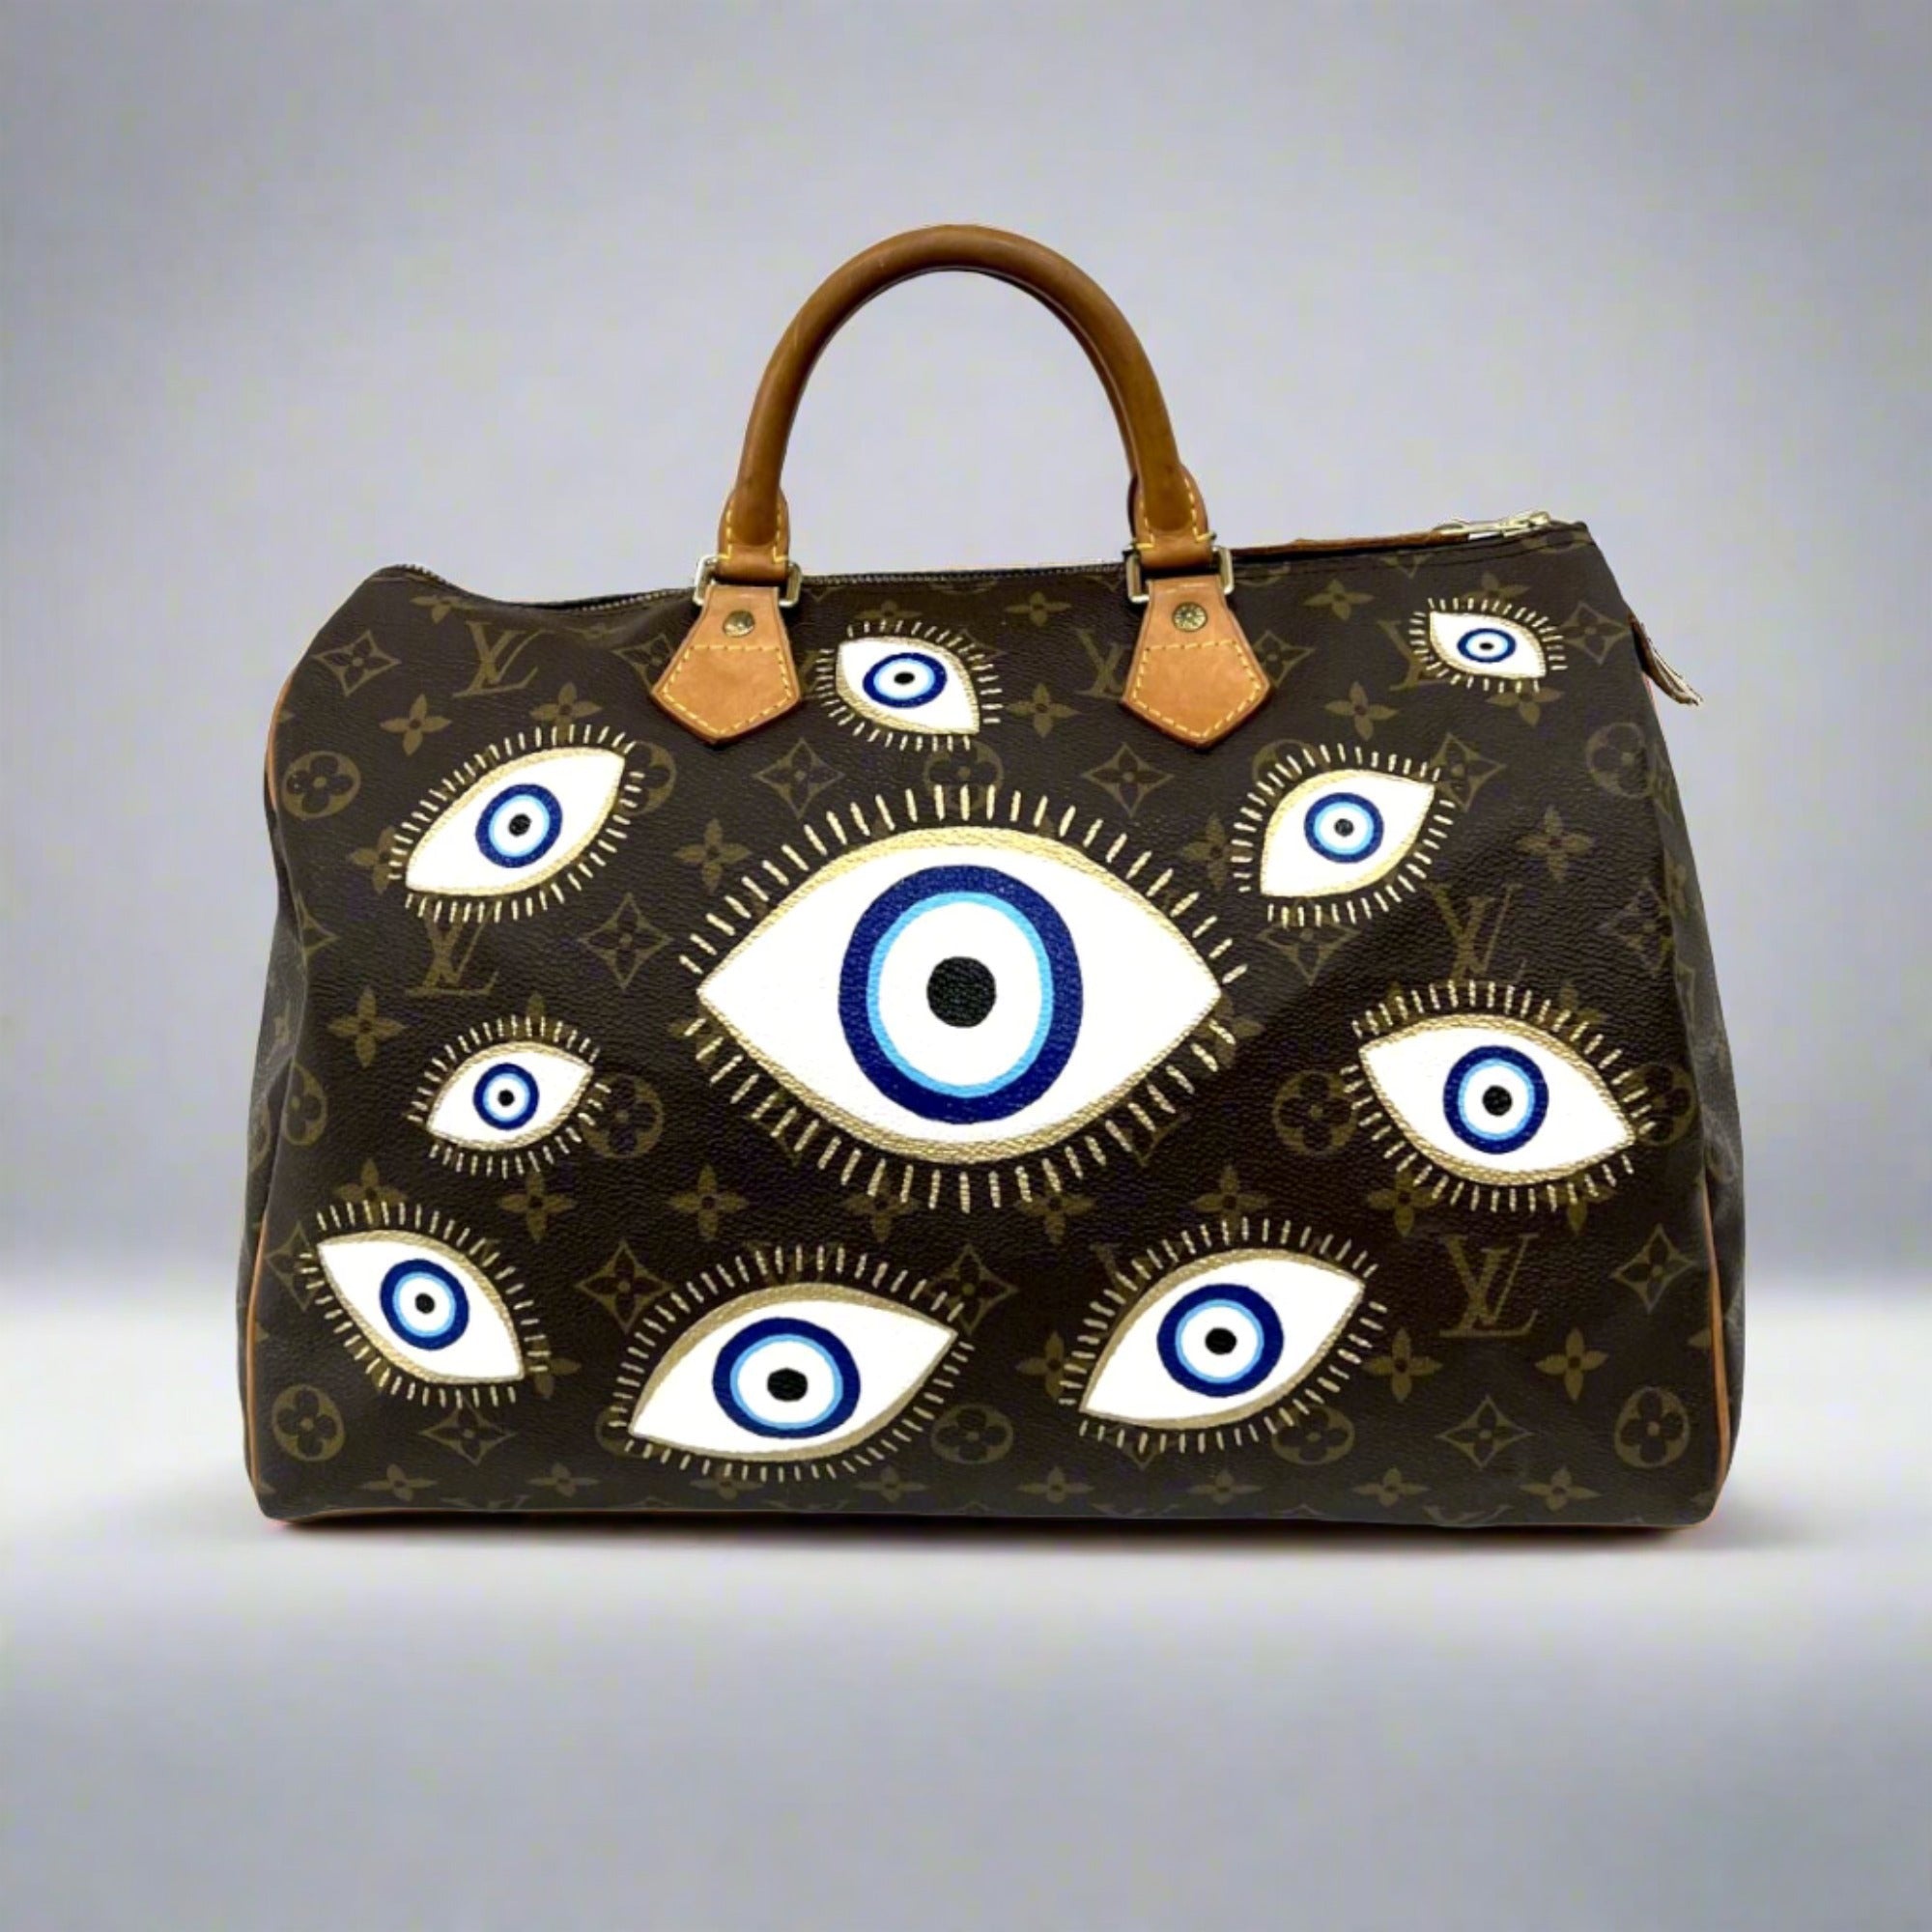 These Elegant and Modern Handbags Have Simple Geometric Designs